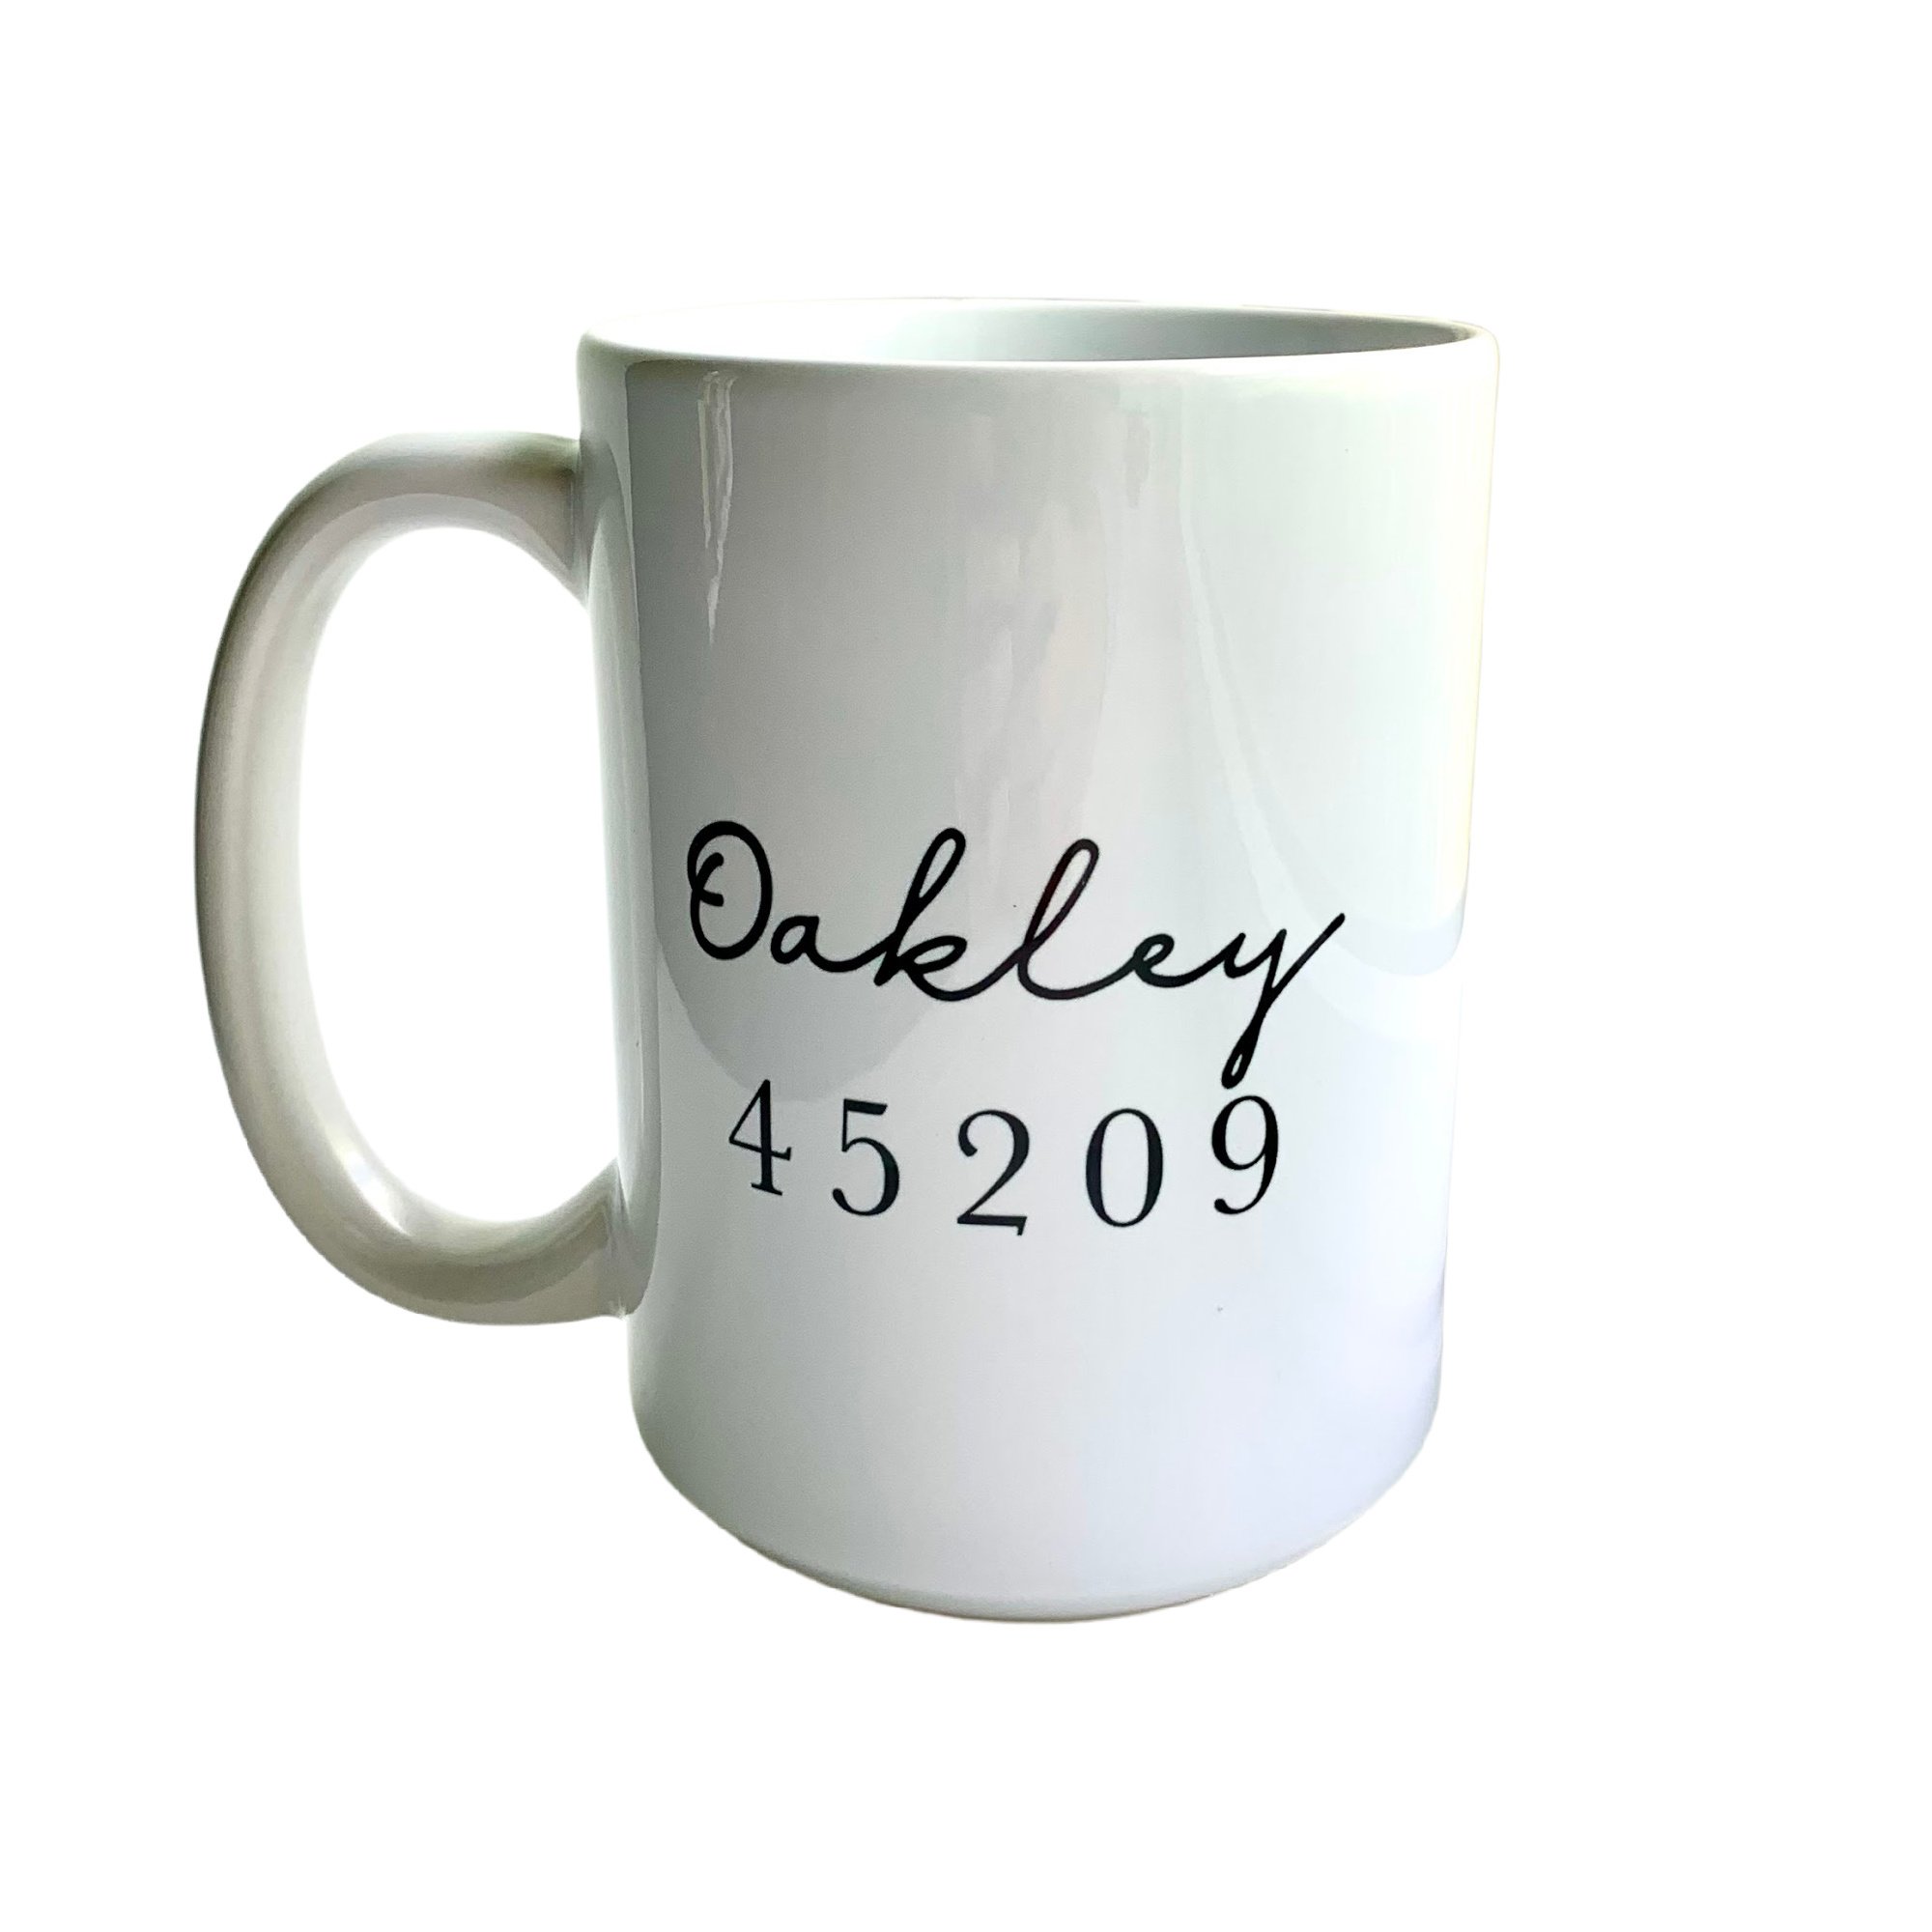 Send Me a Dream Oakley 45209 Mug